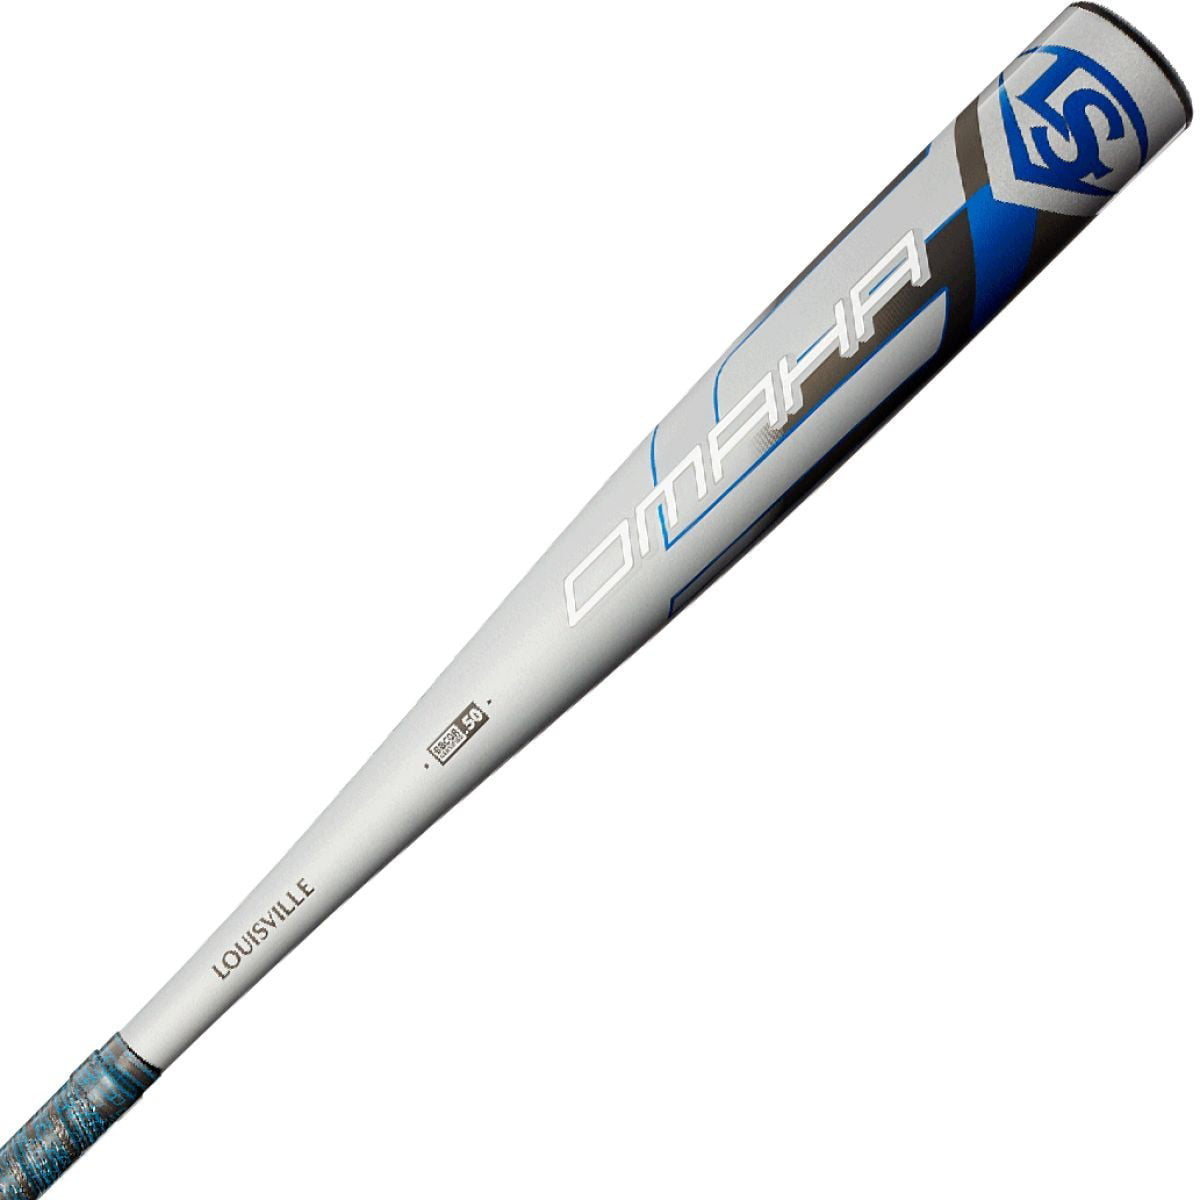 BBCOR Baseball Bat Lists @ $200 -3 NEW Louisville Slugger Omaha 518 